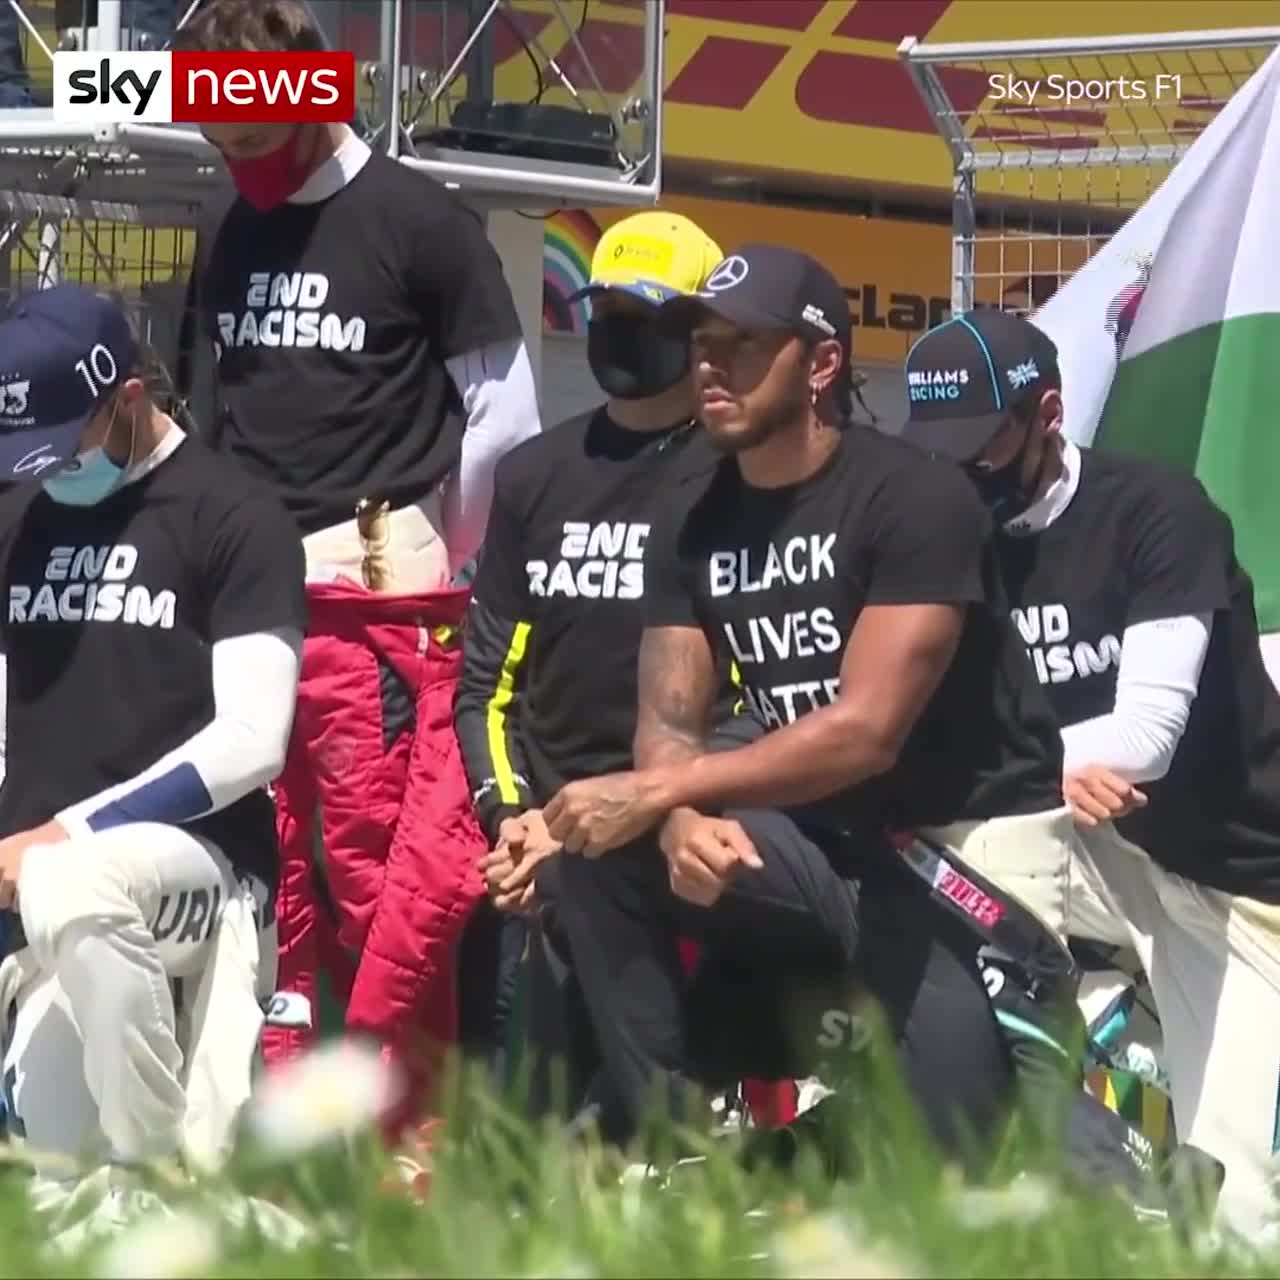 Led by Lewis Hamilton, 14 Formula 1 drivers take a knee before Austrian  Grand Prix - Yahoo Sports